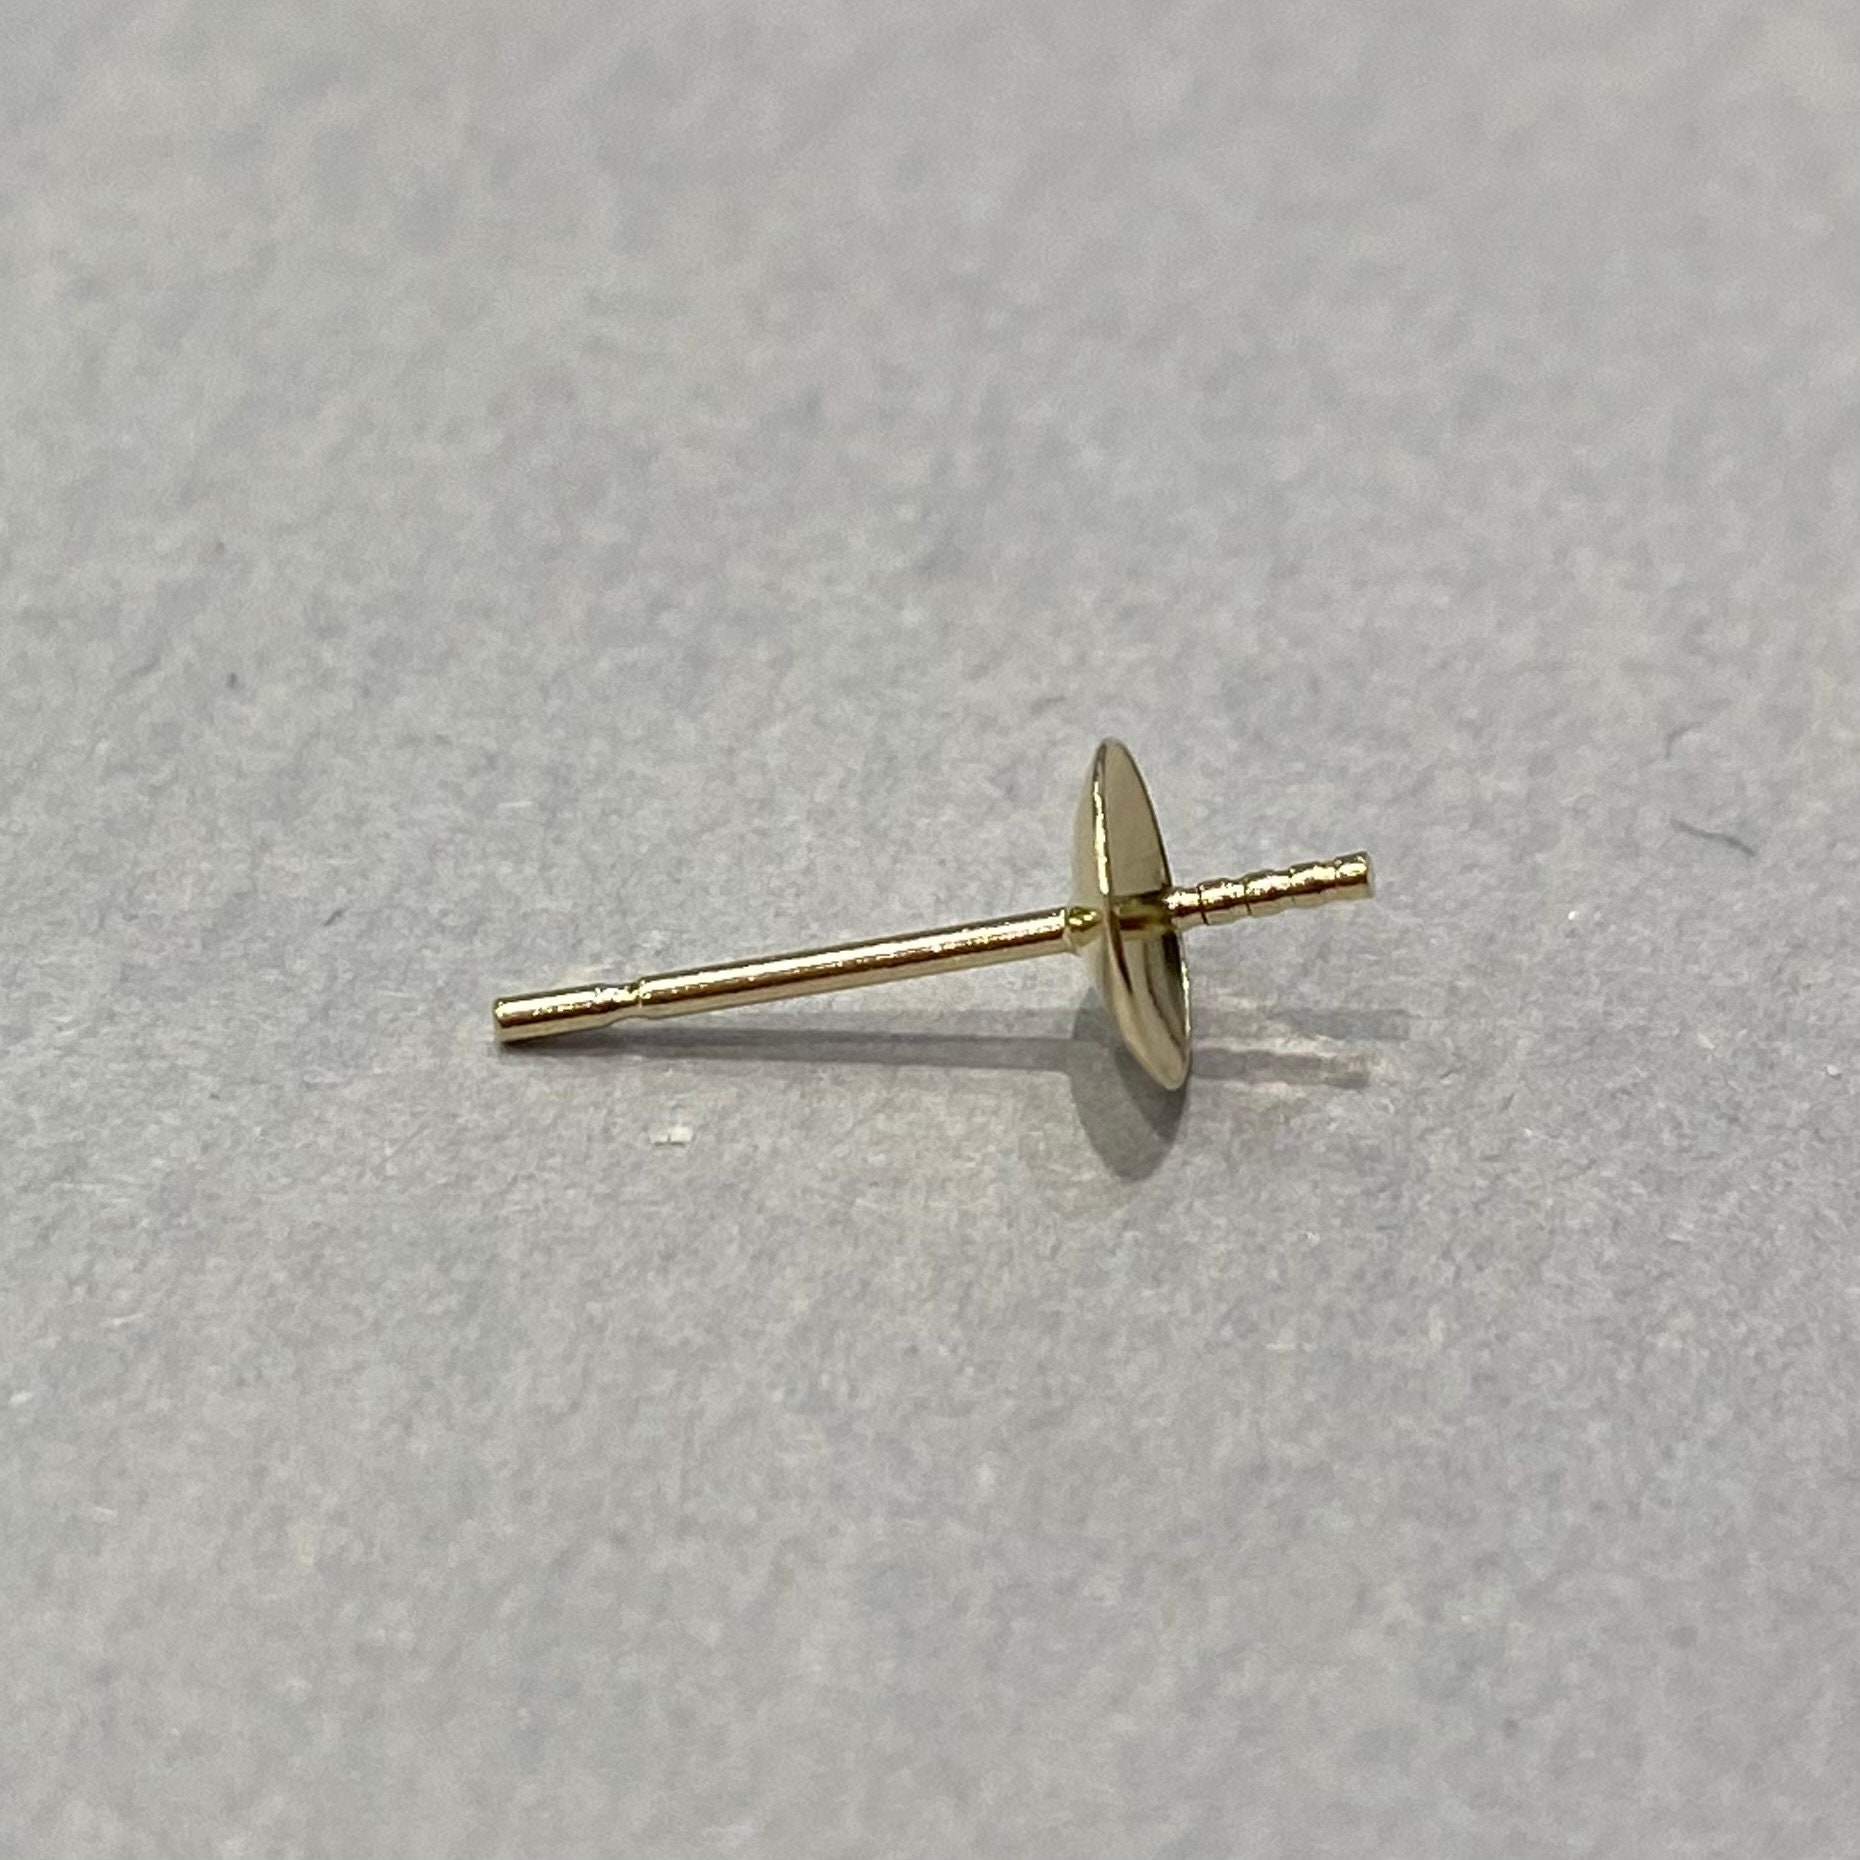 20pc NEWER VERSION 7mm Loop Stainless Steel Silver Hook Earring Findings,  #3 earring hooks, earring findings, earring hardware, fish hooks